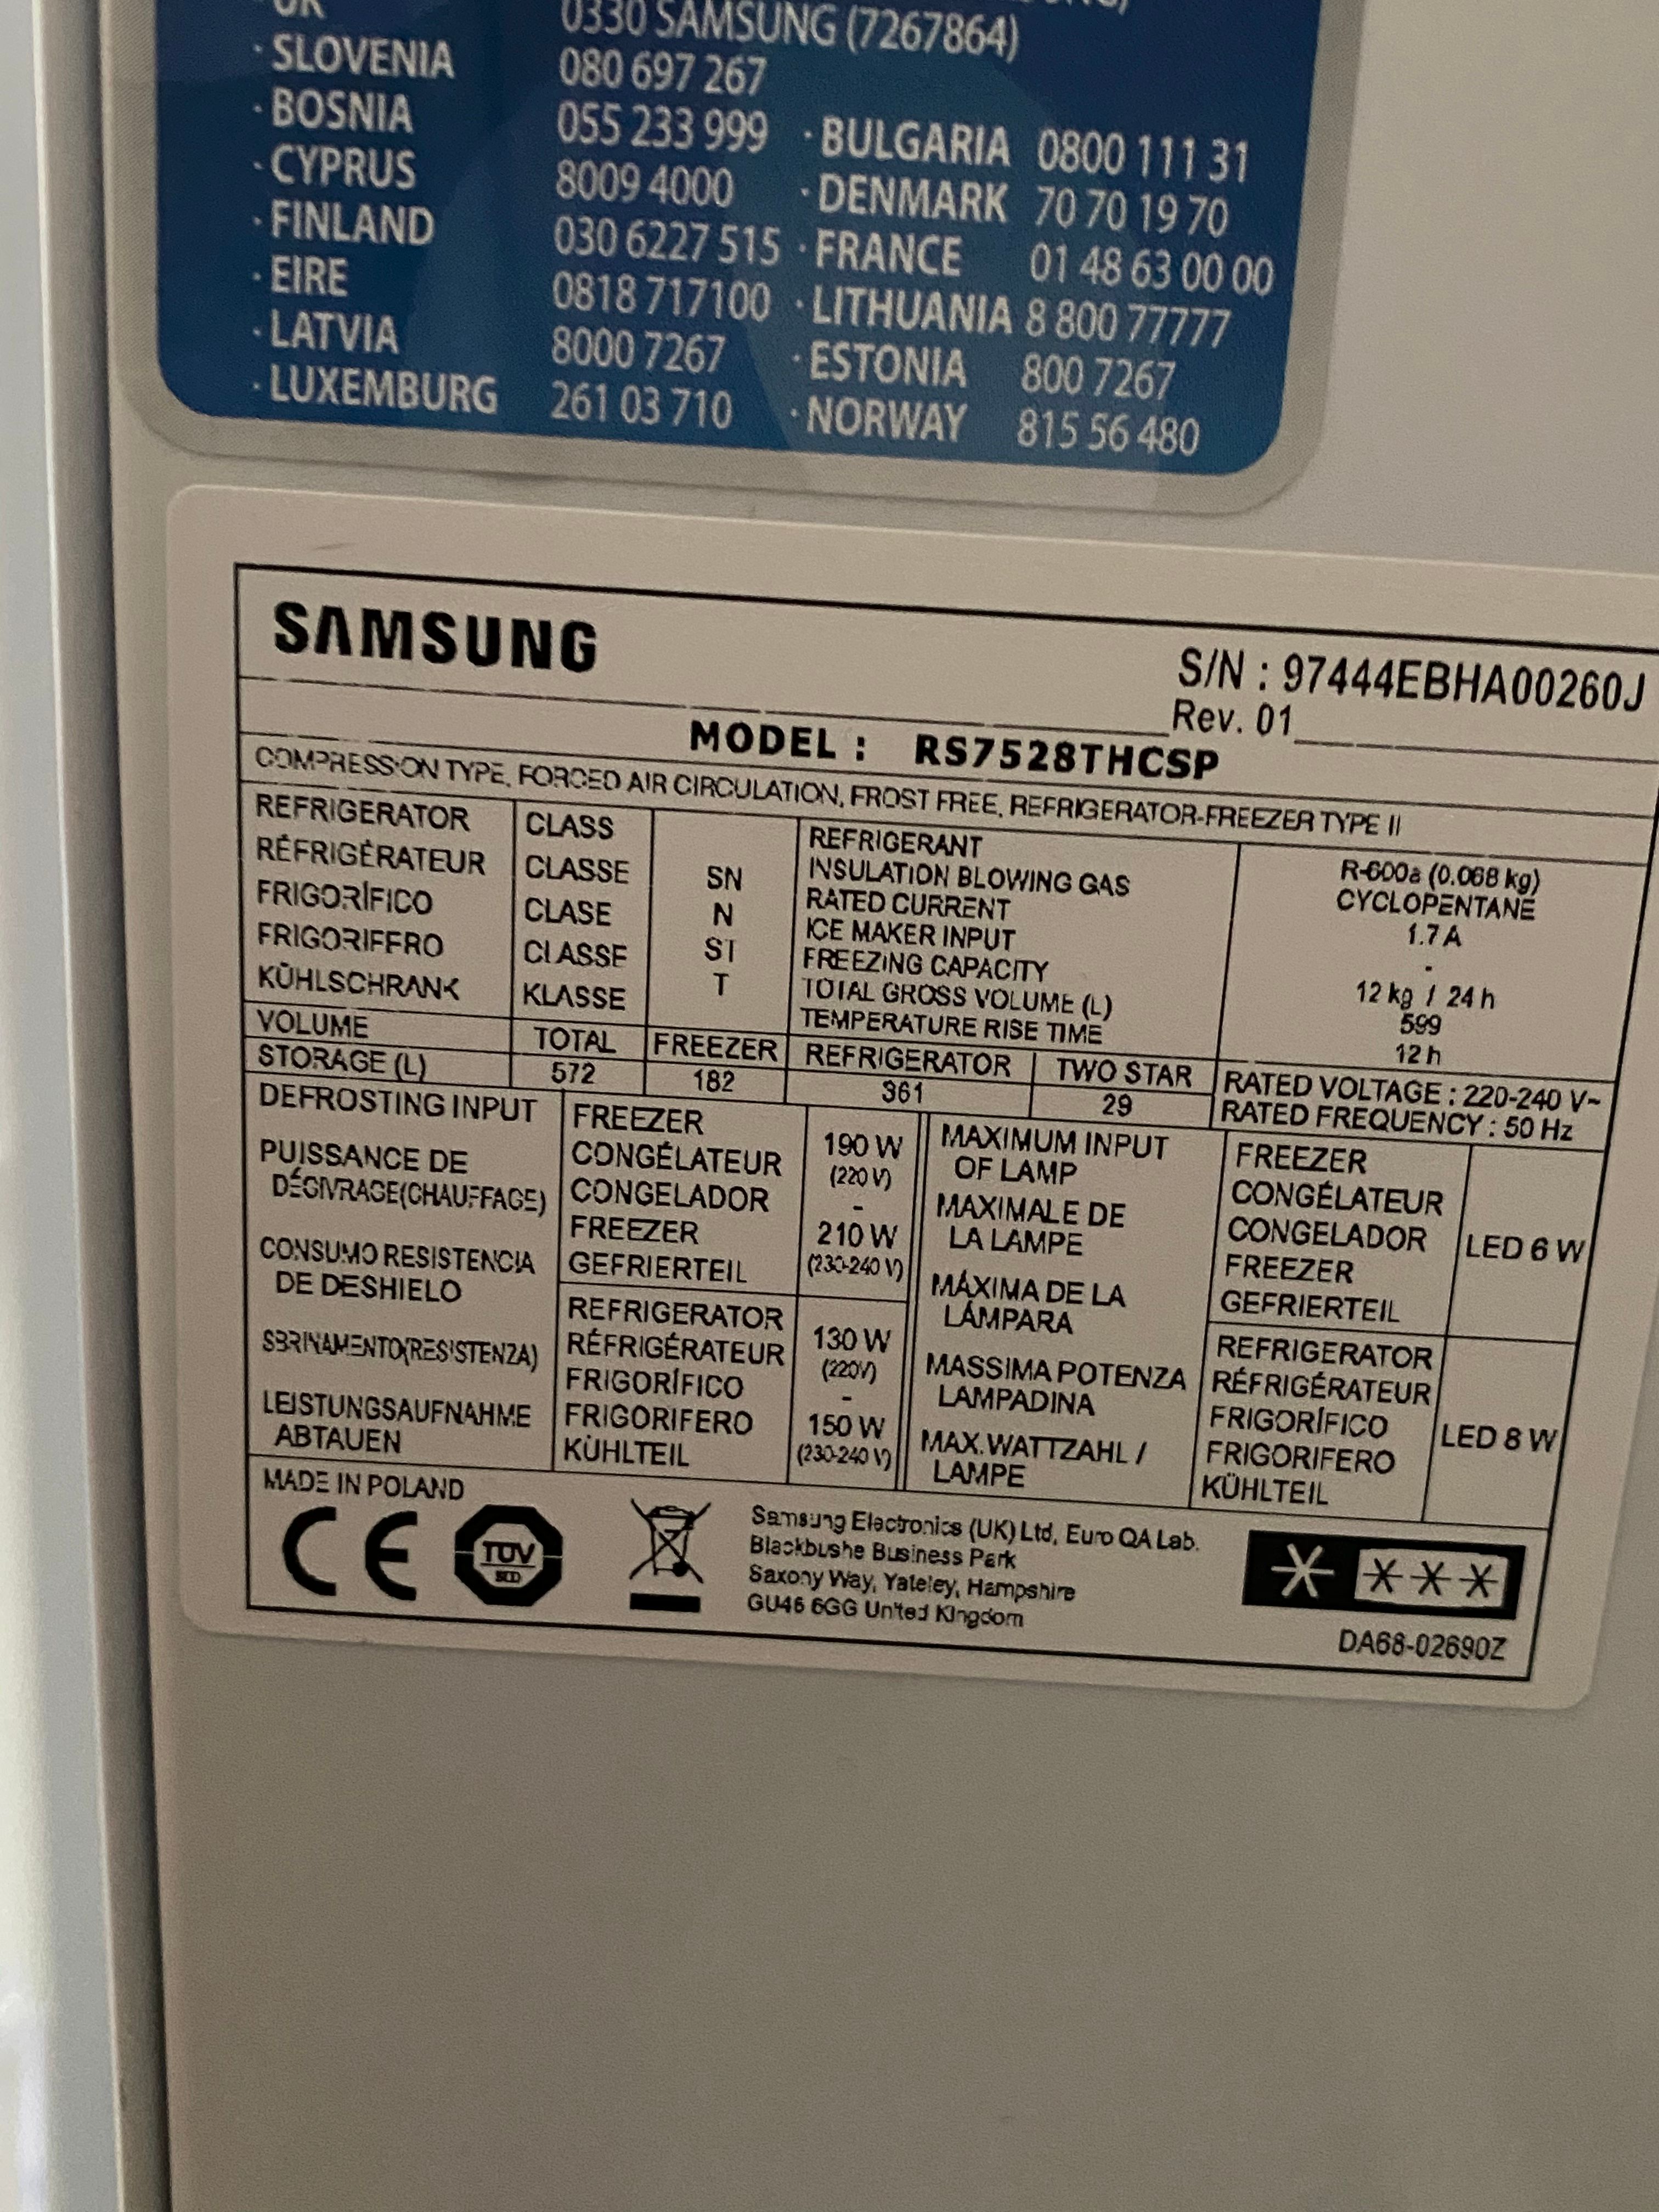 Warranty 10 years for fridge - Samsung Community